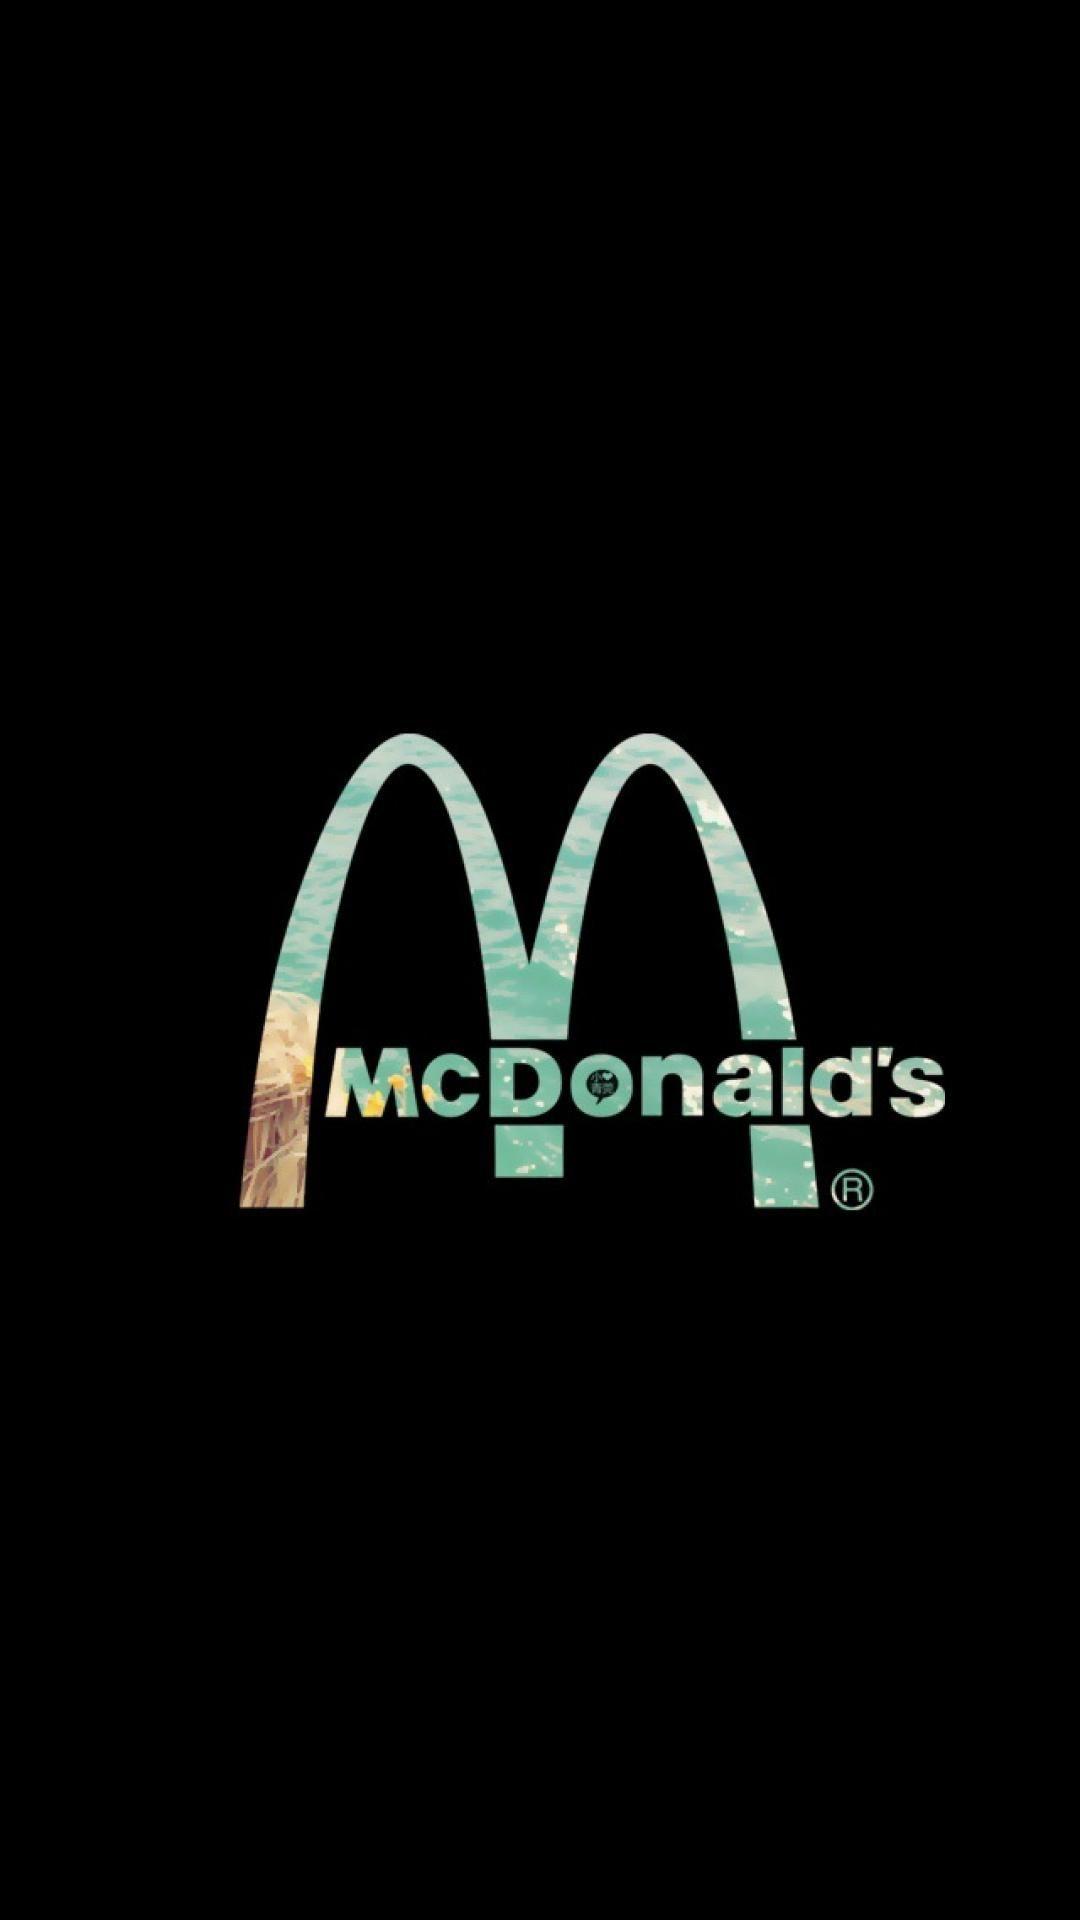 Wallpaper  company eating Katy Perry fast food mcdonalds dish  1920x1200  wallpaperUp  730224  HD Wallpapers  WallHere